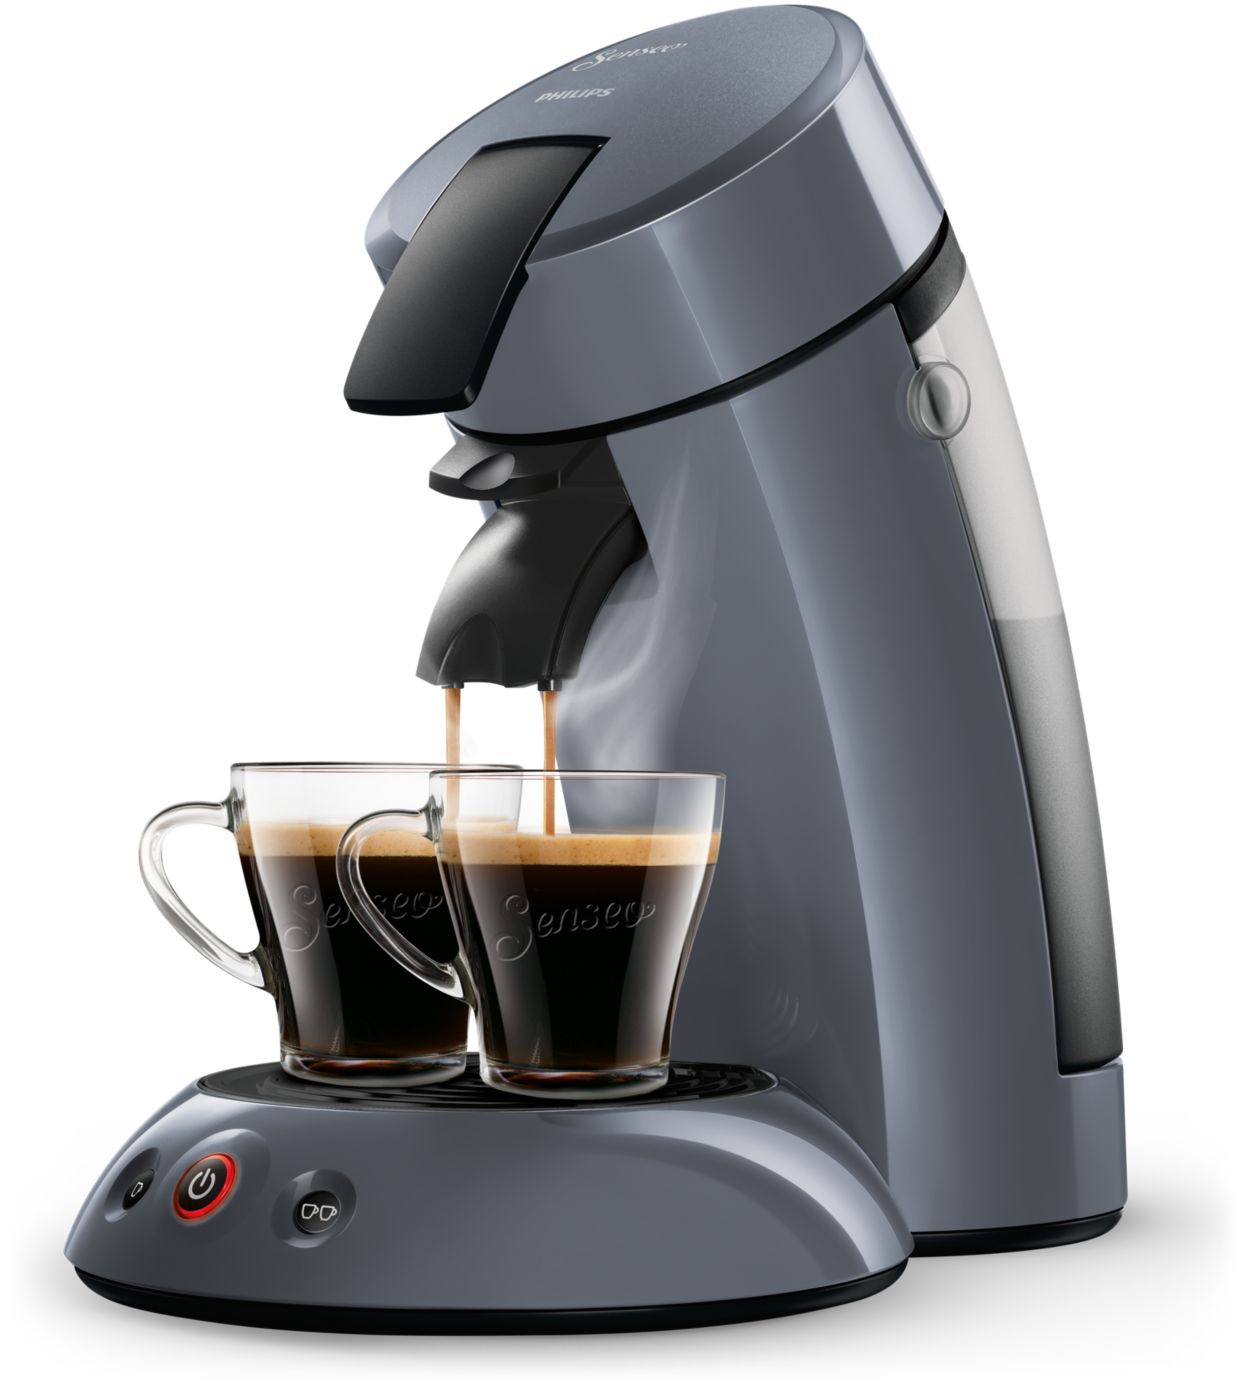 Joint machine à café Senseo - Ampol AGD